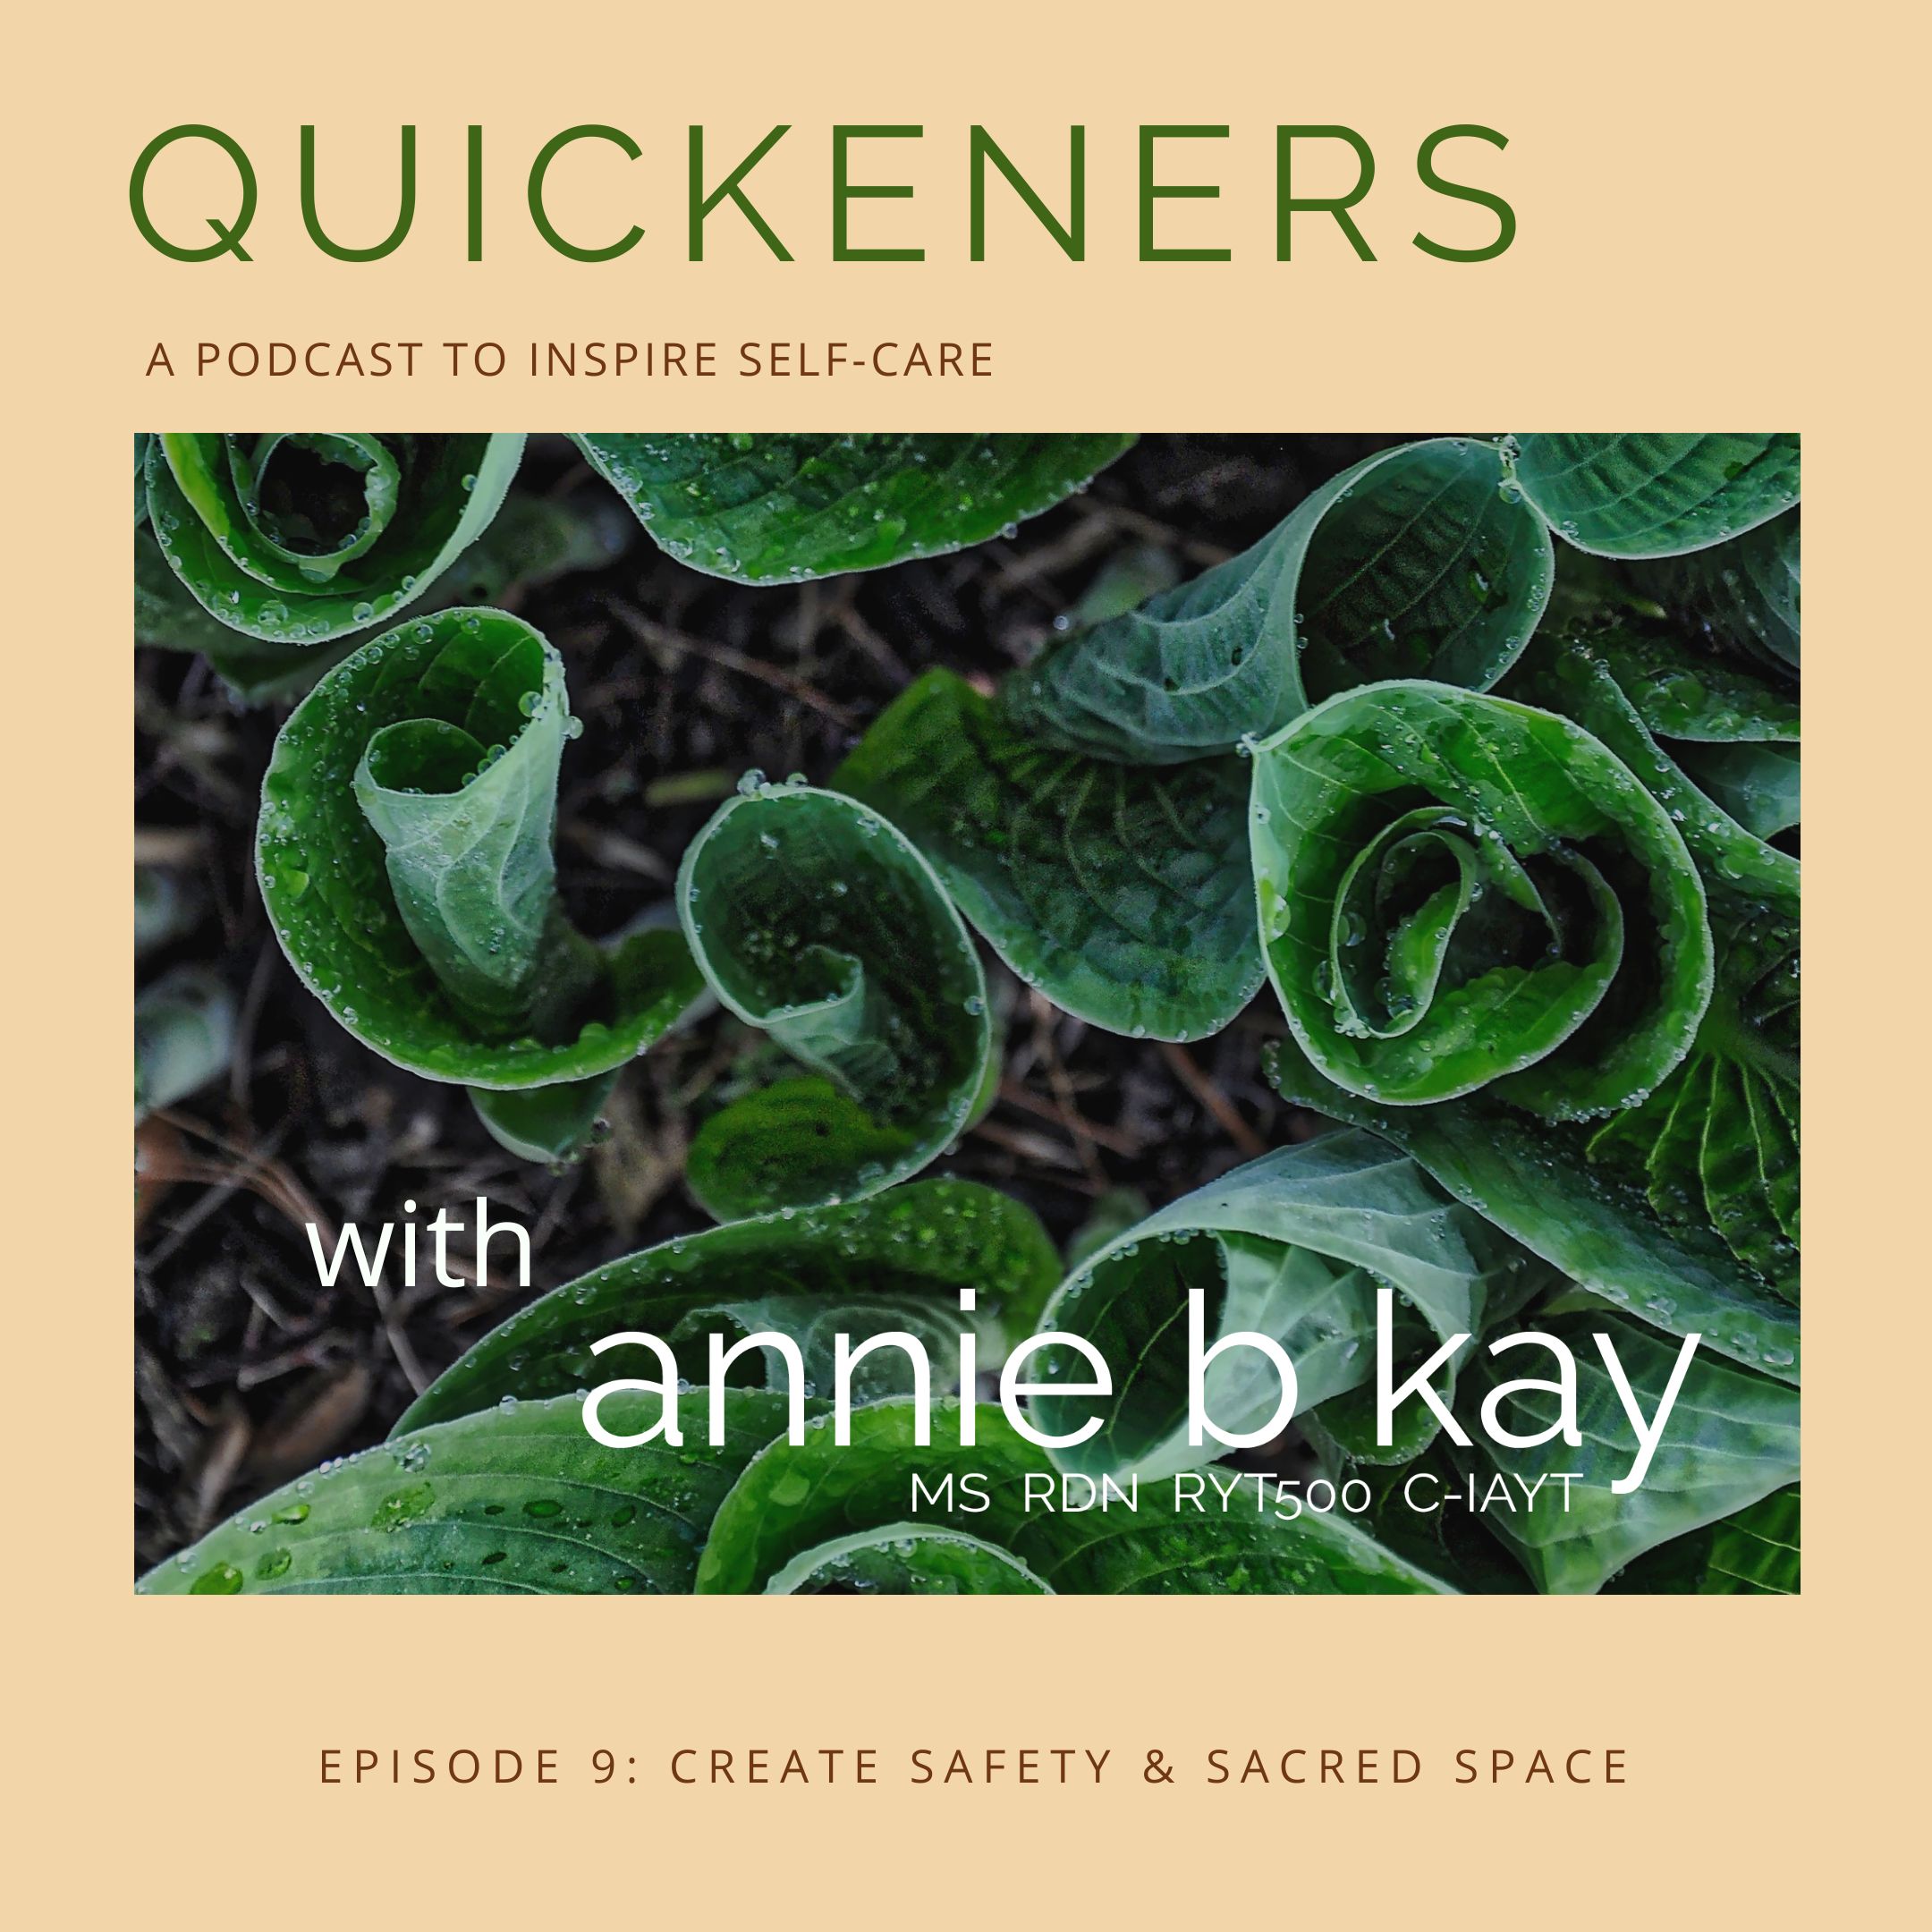 quickeners podcast episode 6